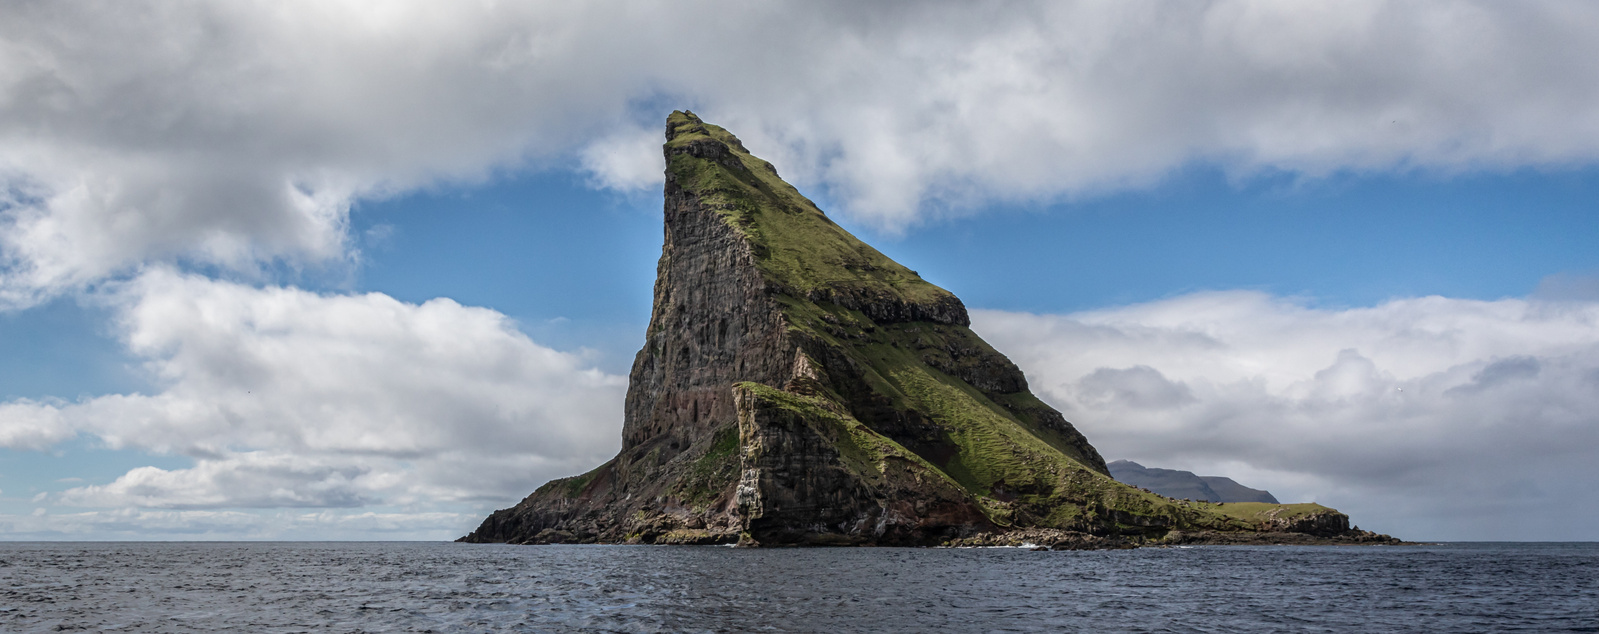 Ön Tindholmur på Färöarna / The island of Tindholmur in the Faroe Islands